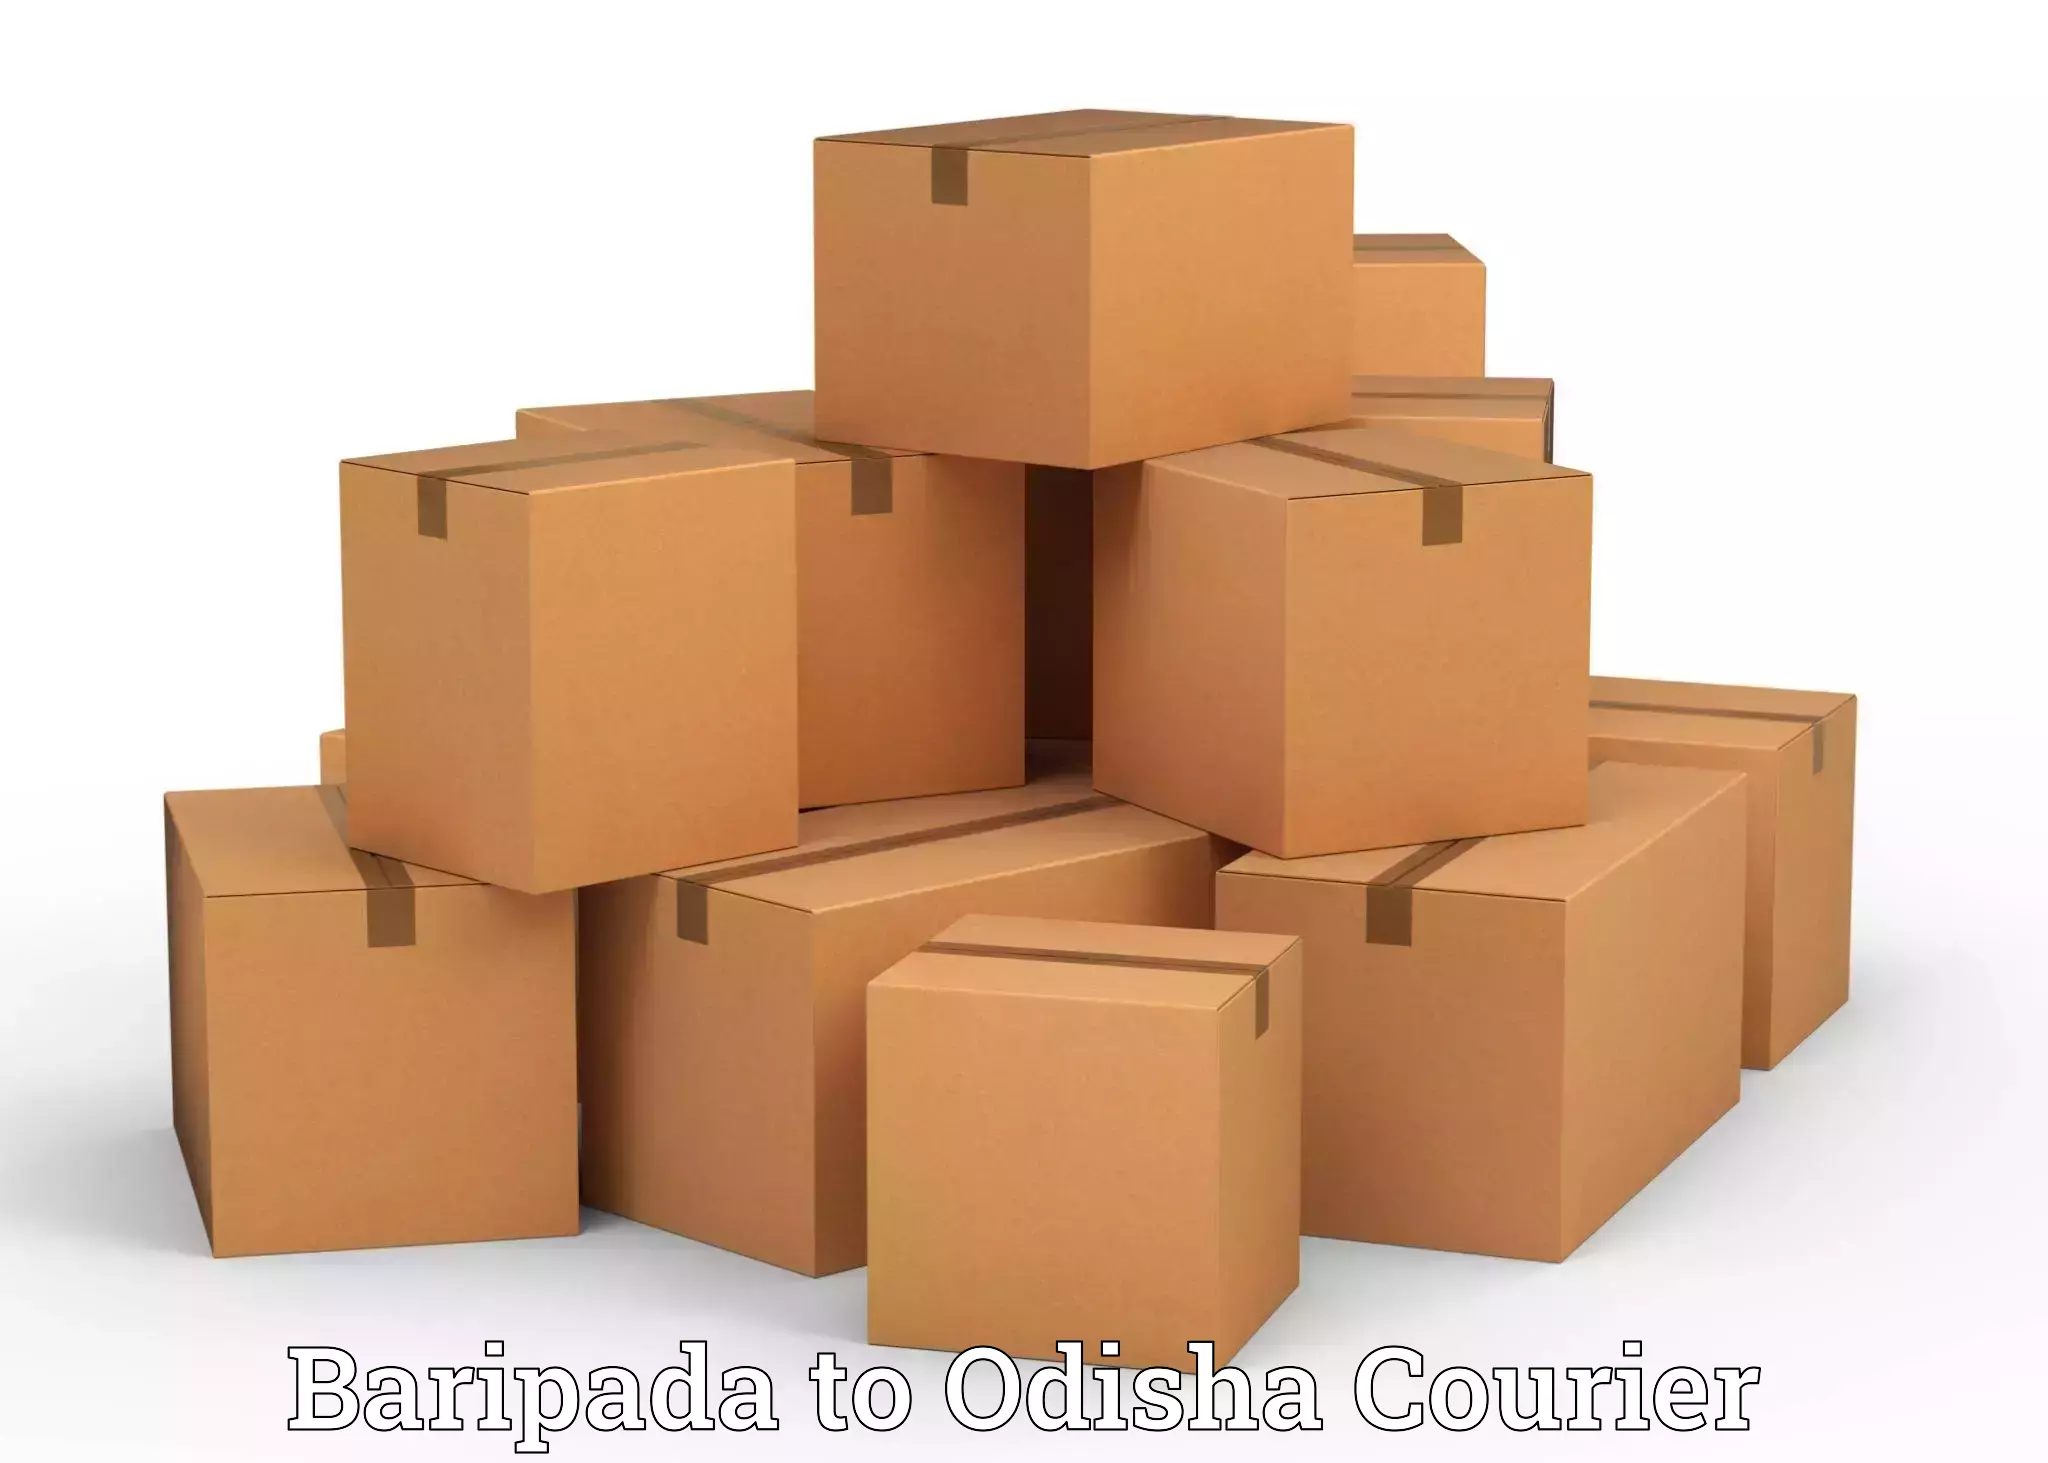 Hassle-free relocation Baripada to Cuttack